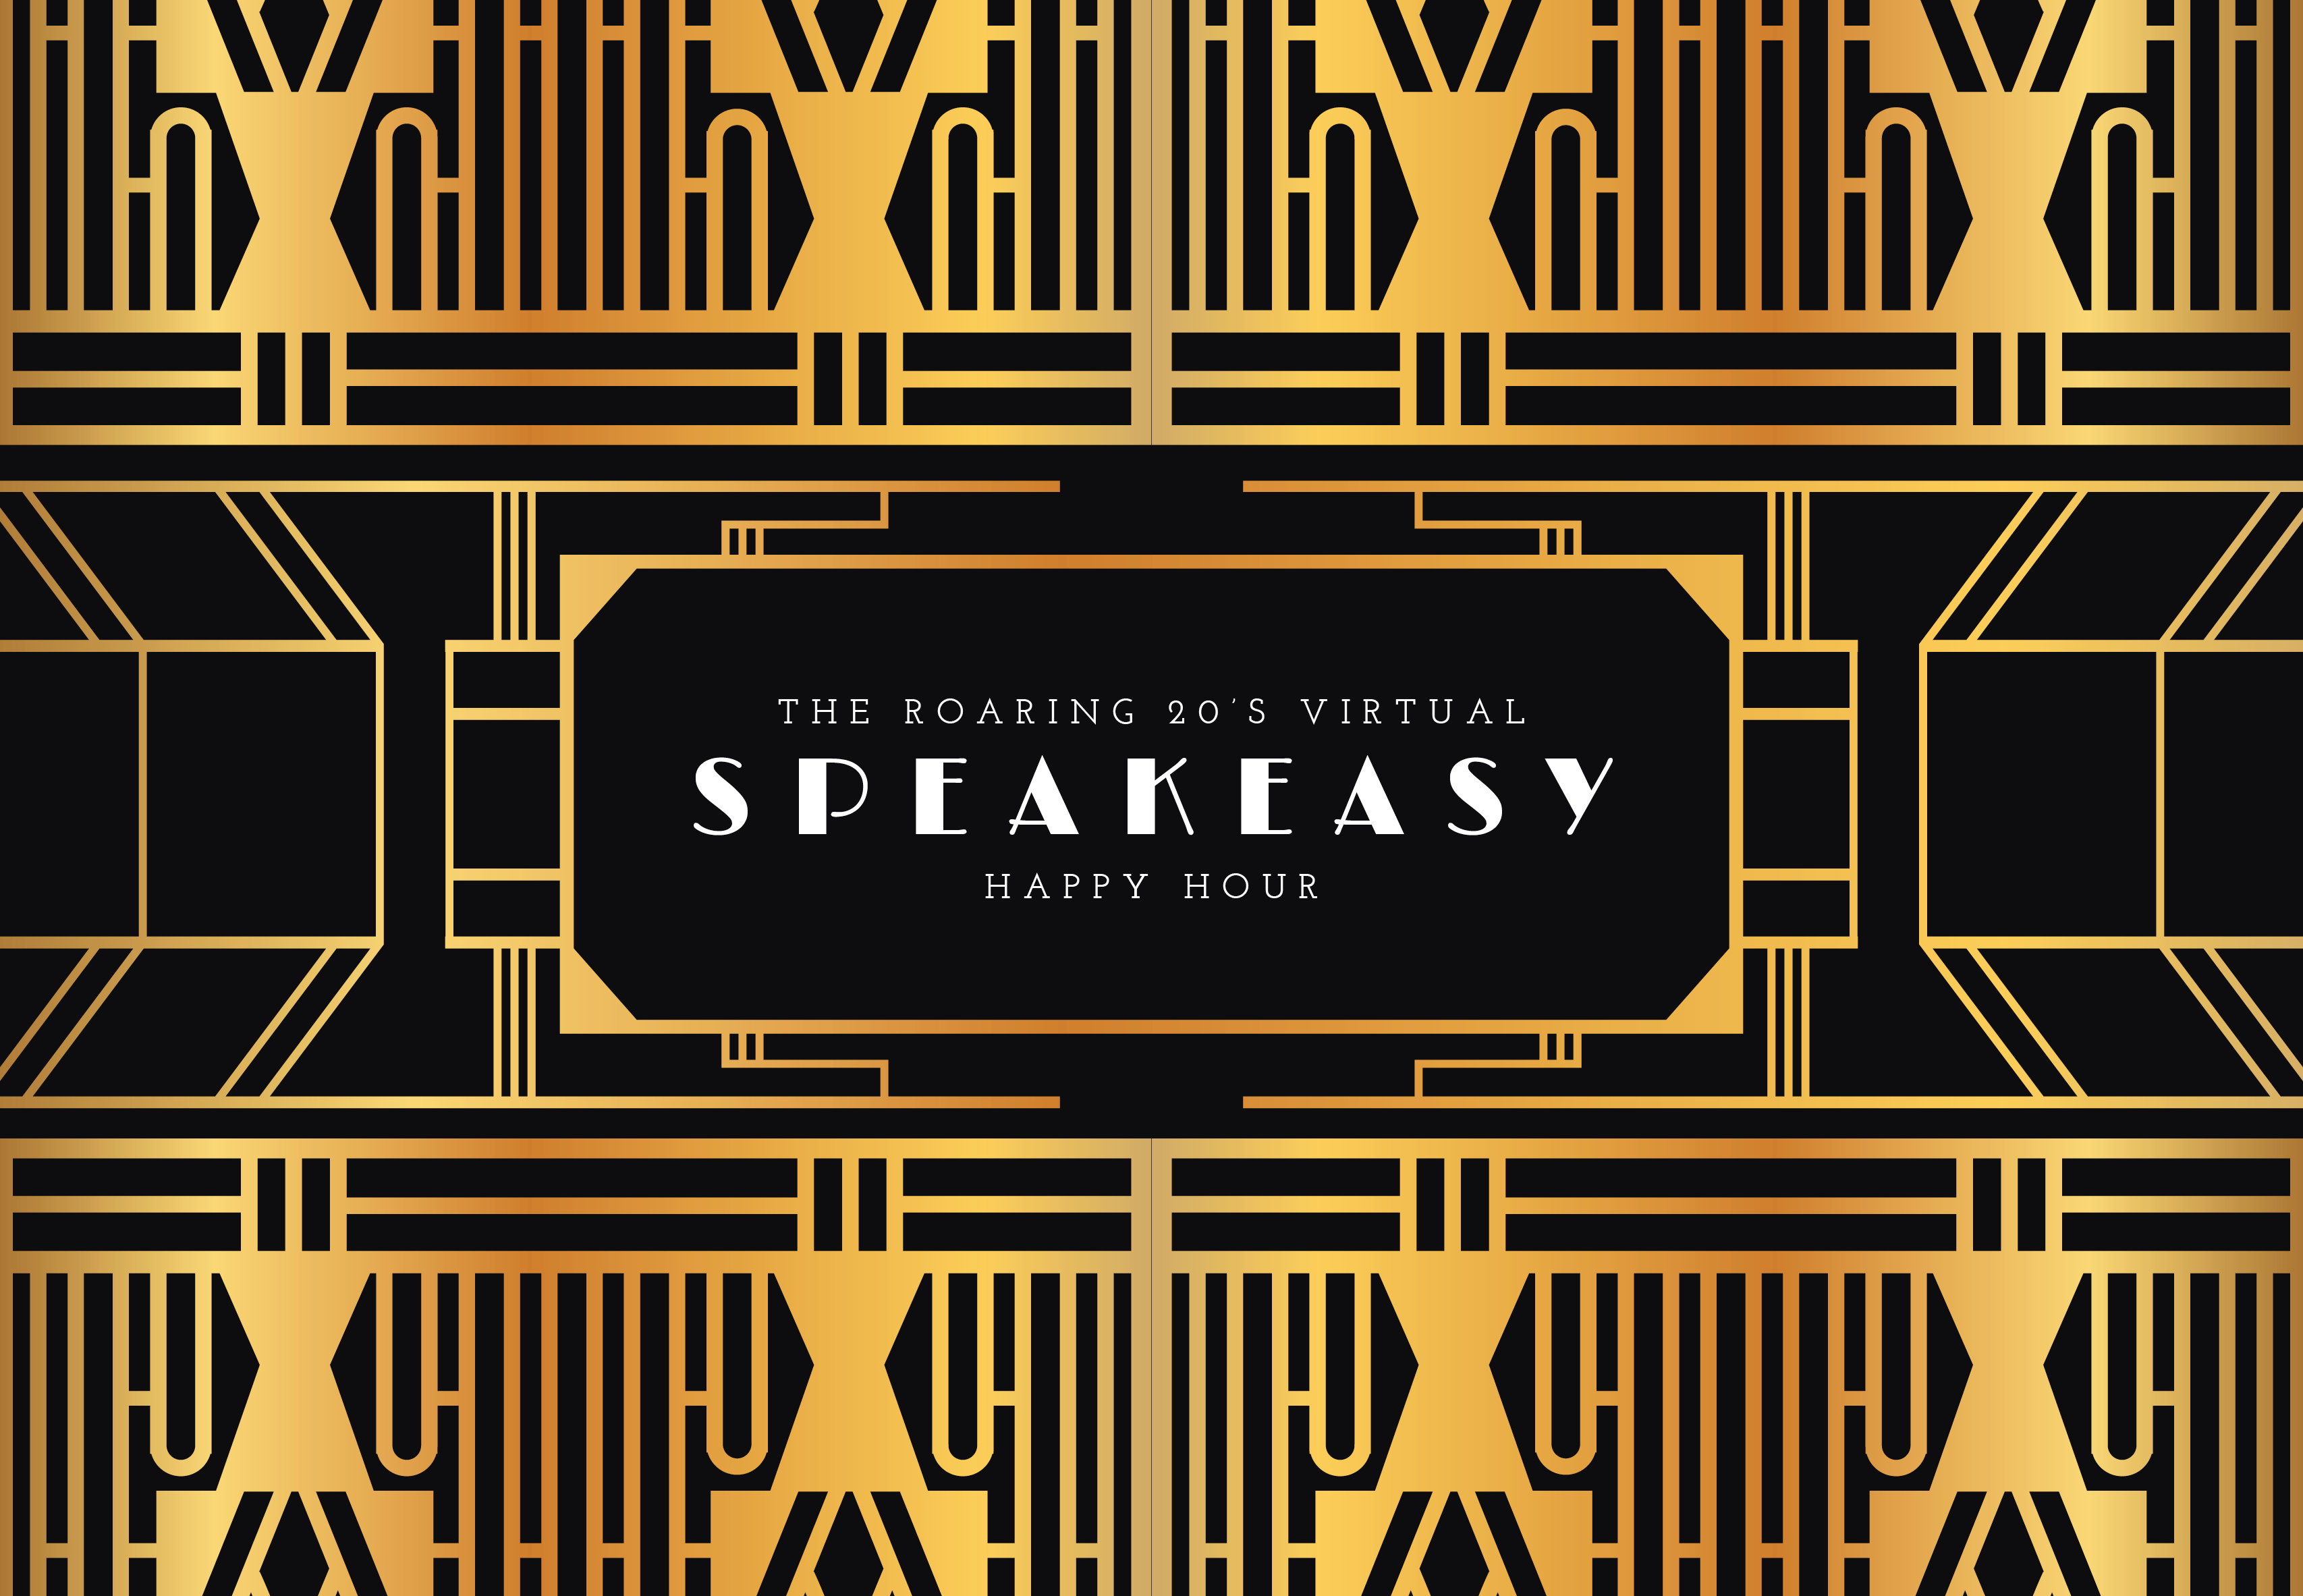 speakeasy logo